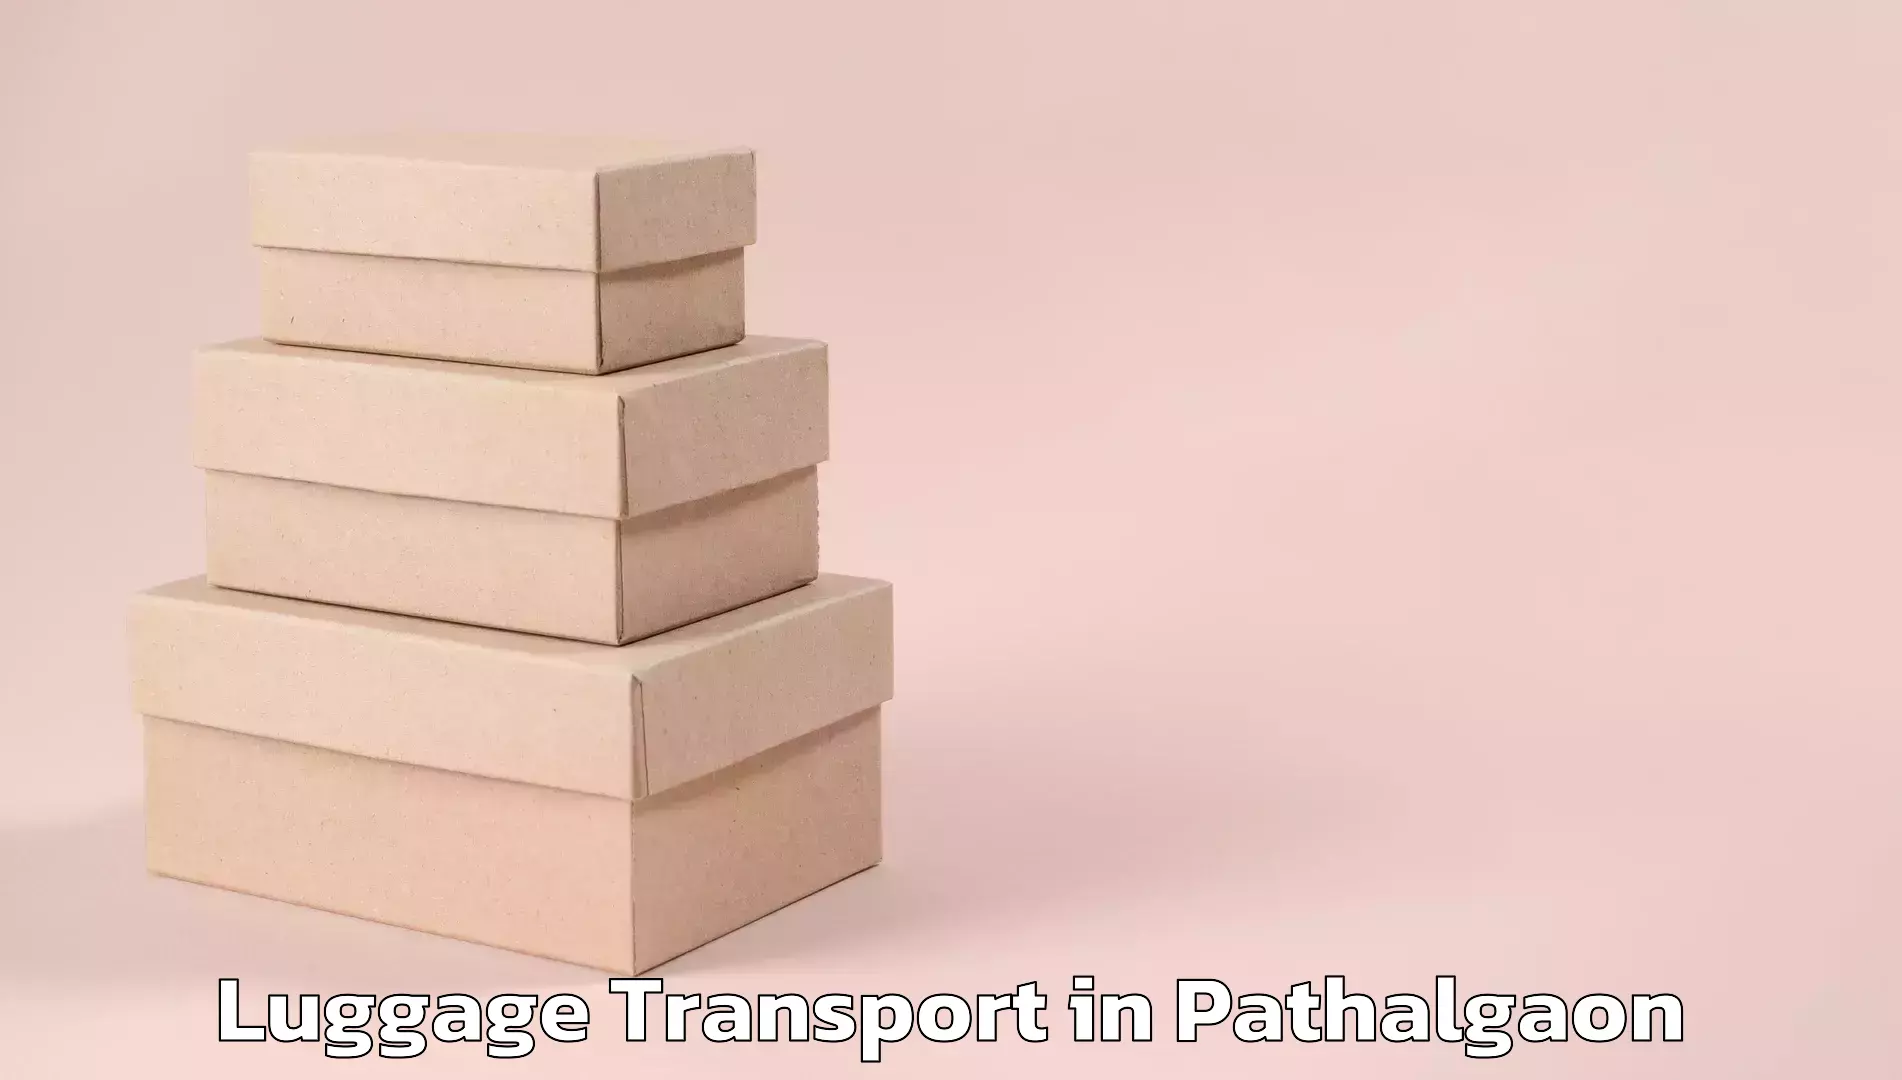 Luggage shipment tracking in Pathalgaon